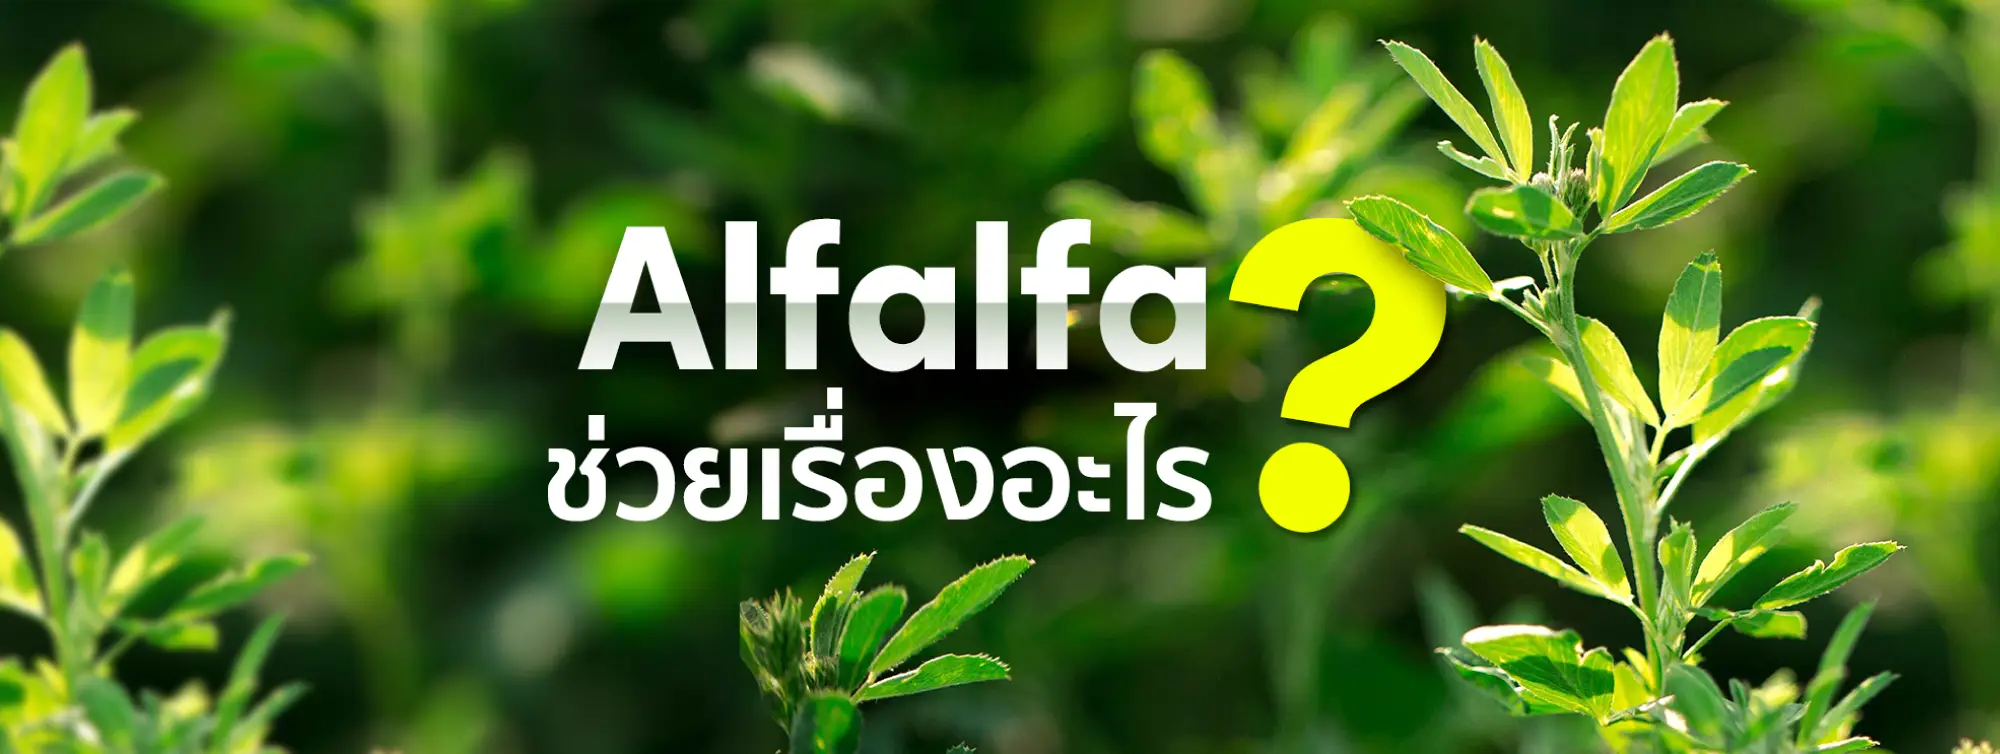 Alfalfa ช่วยเรื่องอะไร มีสรรพคุณและมีประโยชน์ต่อร่างกายอย่างไร